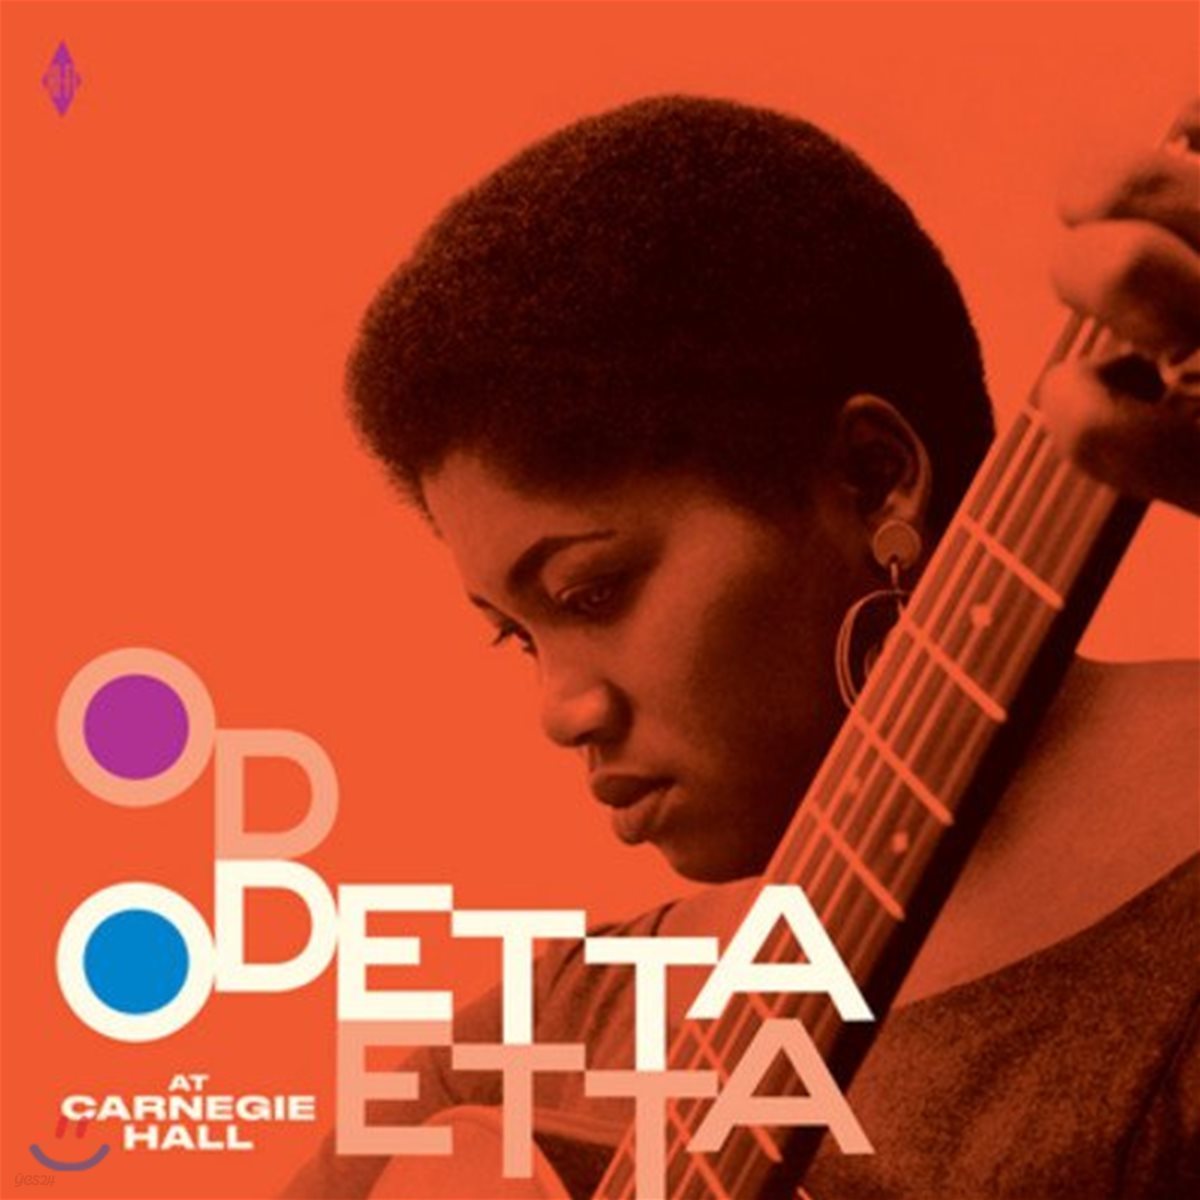 Odetta (오데타) - At Carnegie Hall [LP]